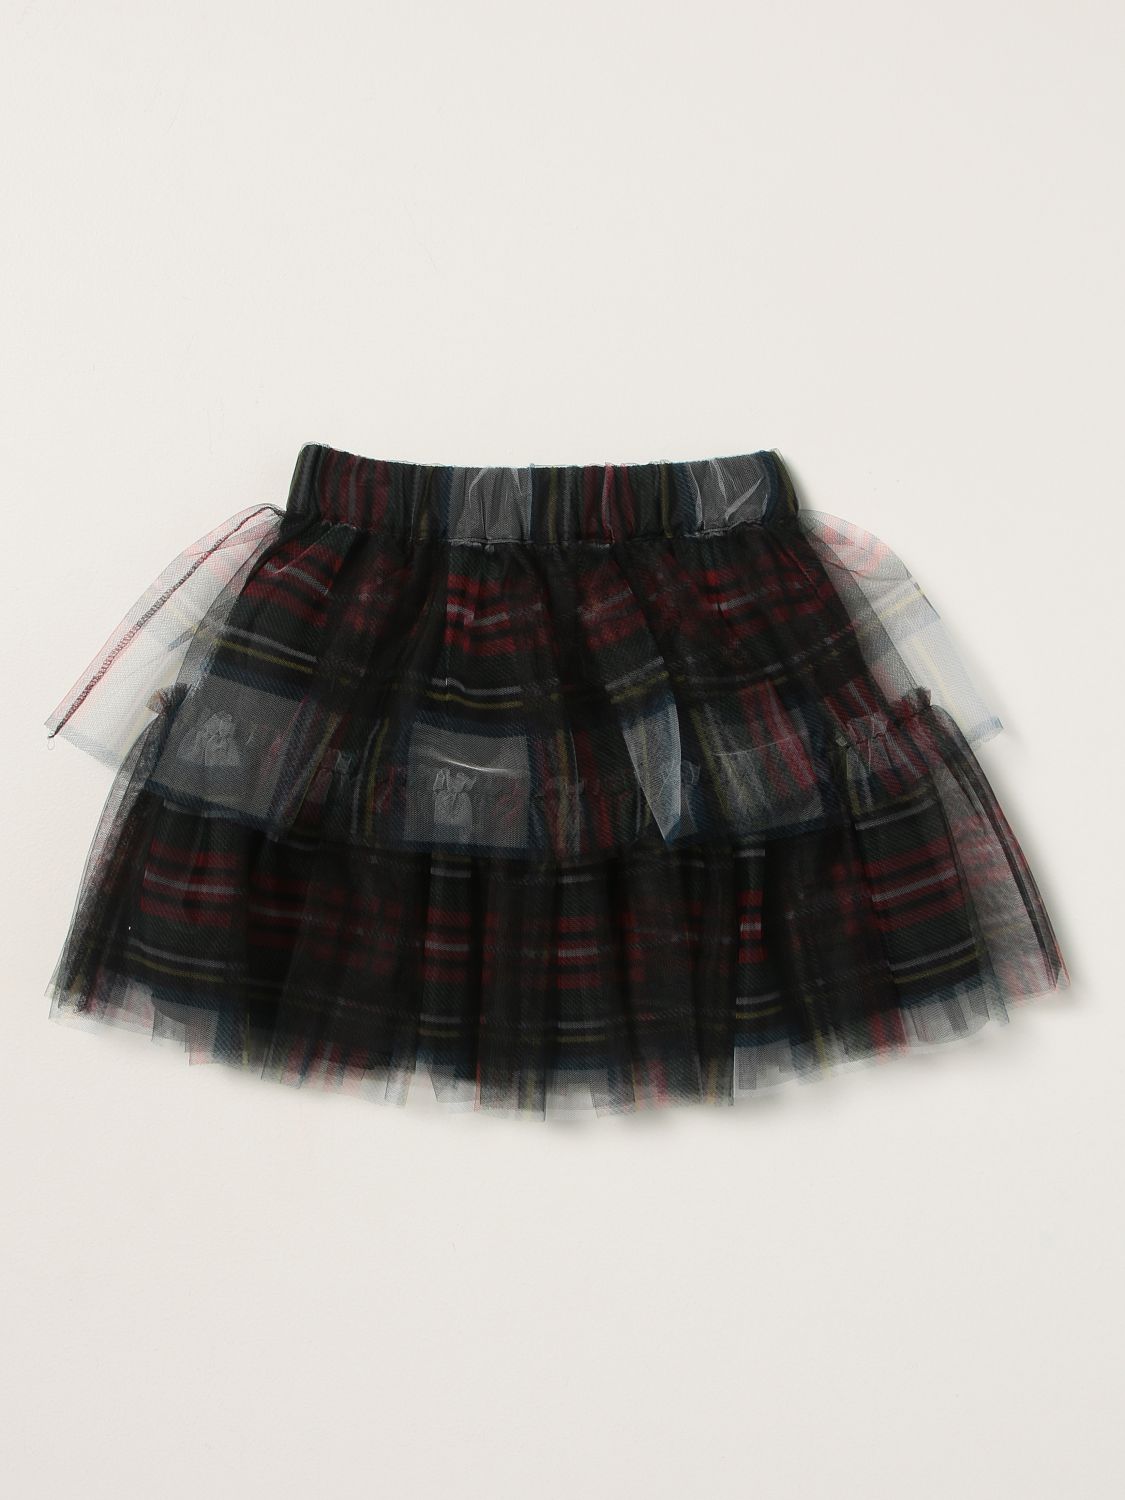 Skirt Philosophy Di Lorenzo Serafini: Philosophy Di Lorenzo Serafini mini skirt multicolor 2